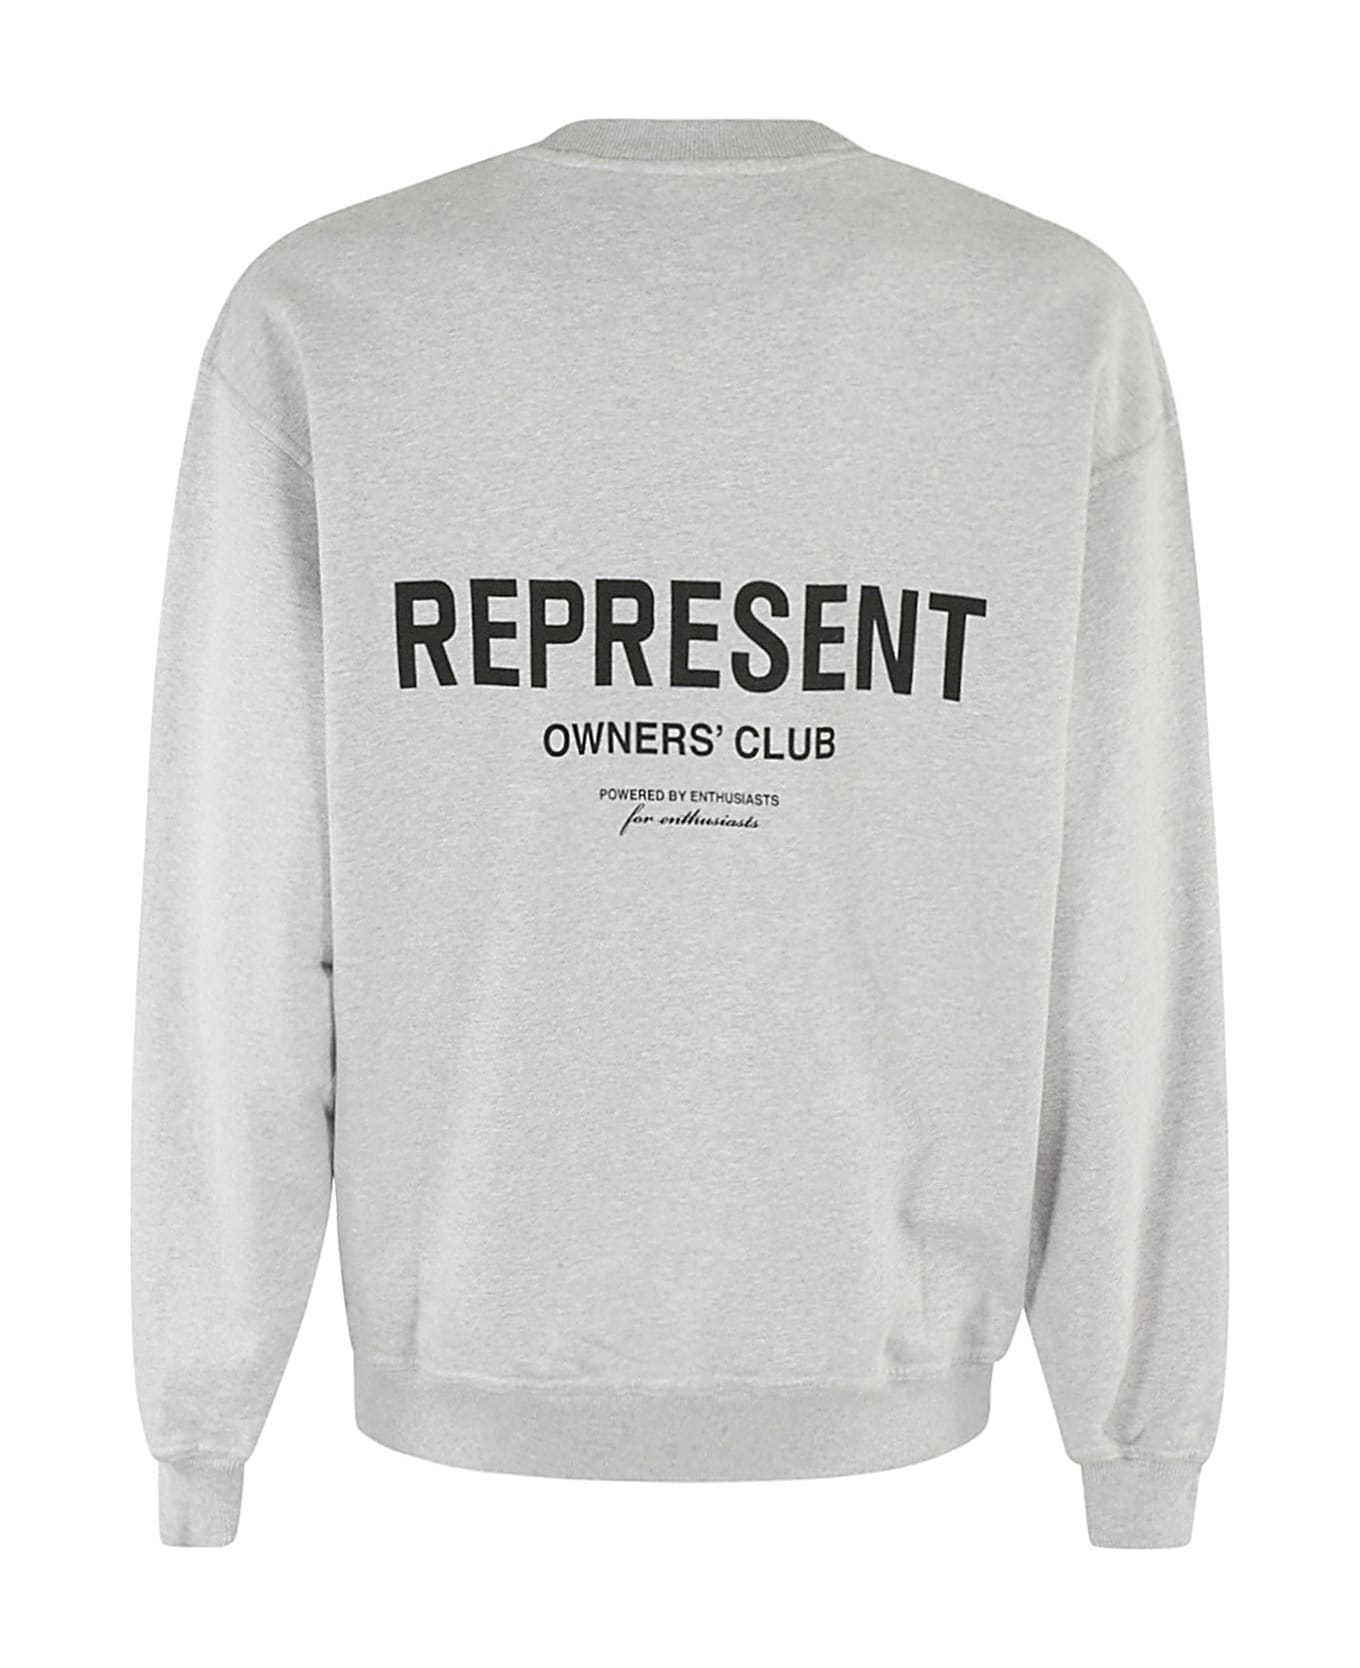 REPRESENT Owners Club Sweater - Ash Grey Black フリース